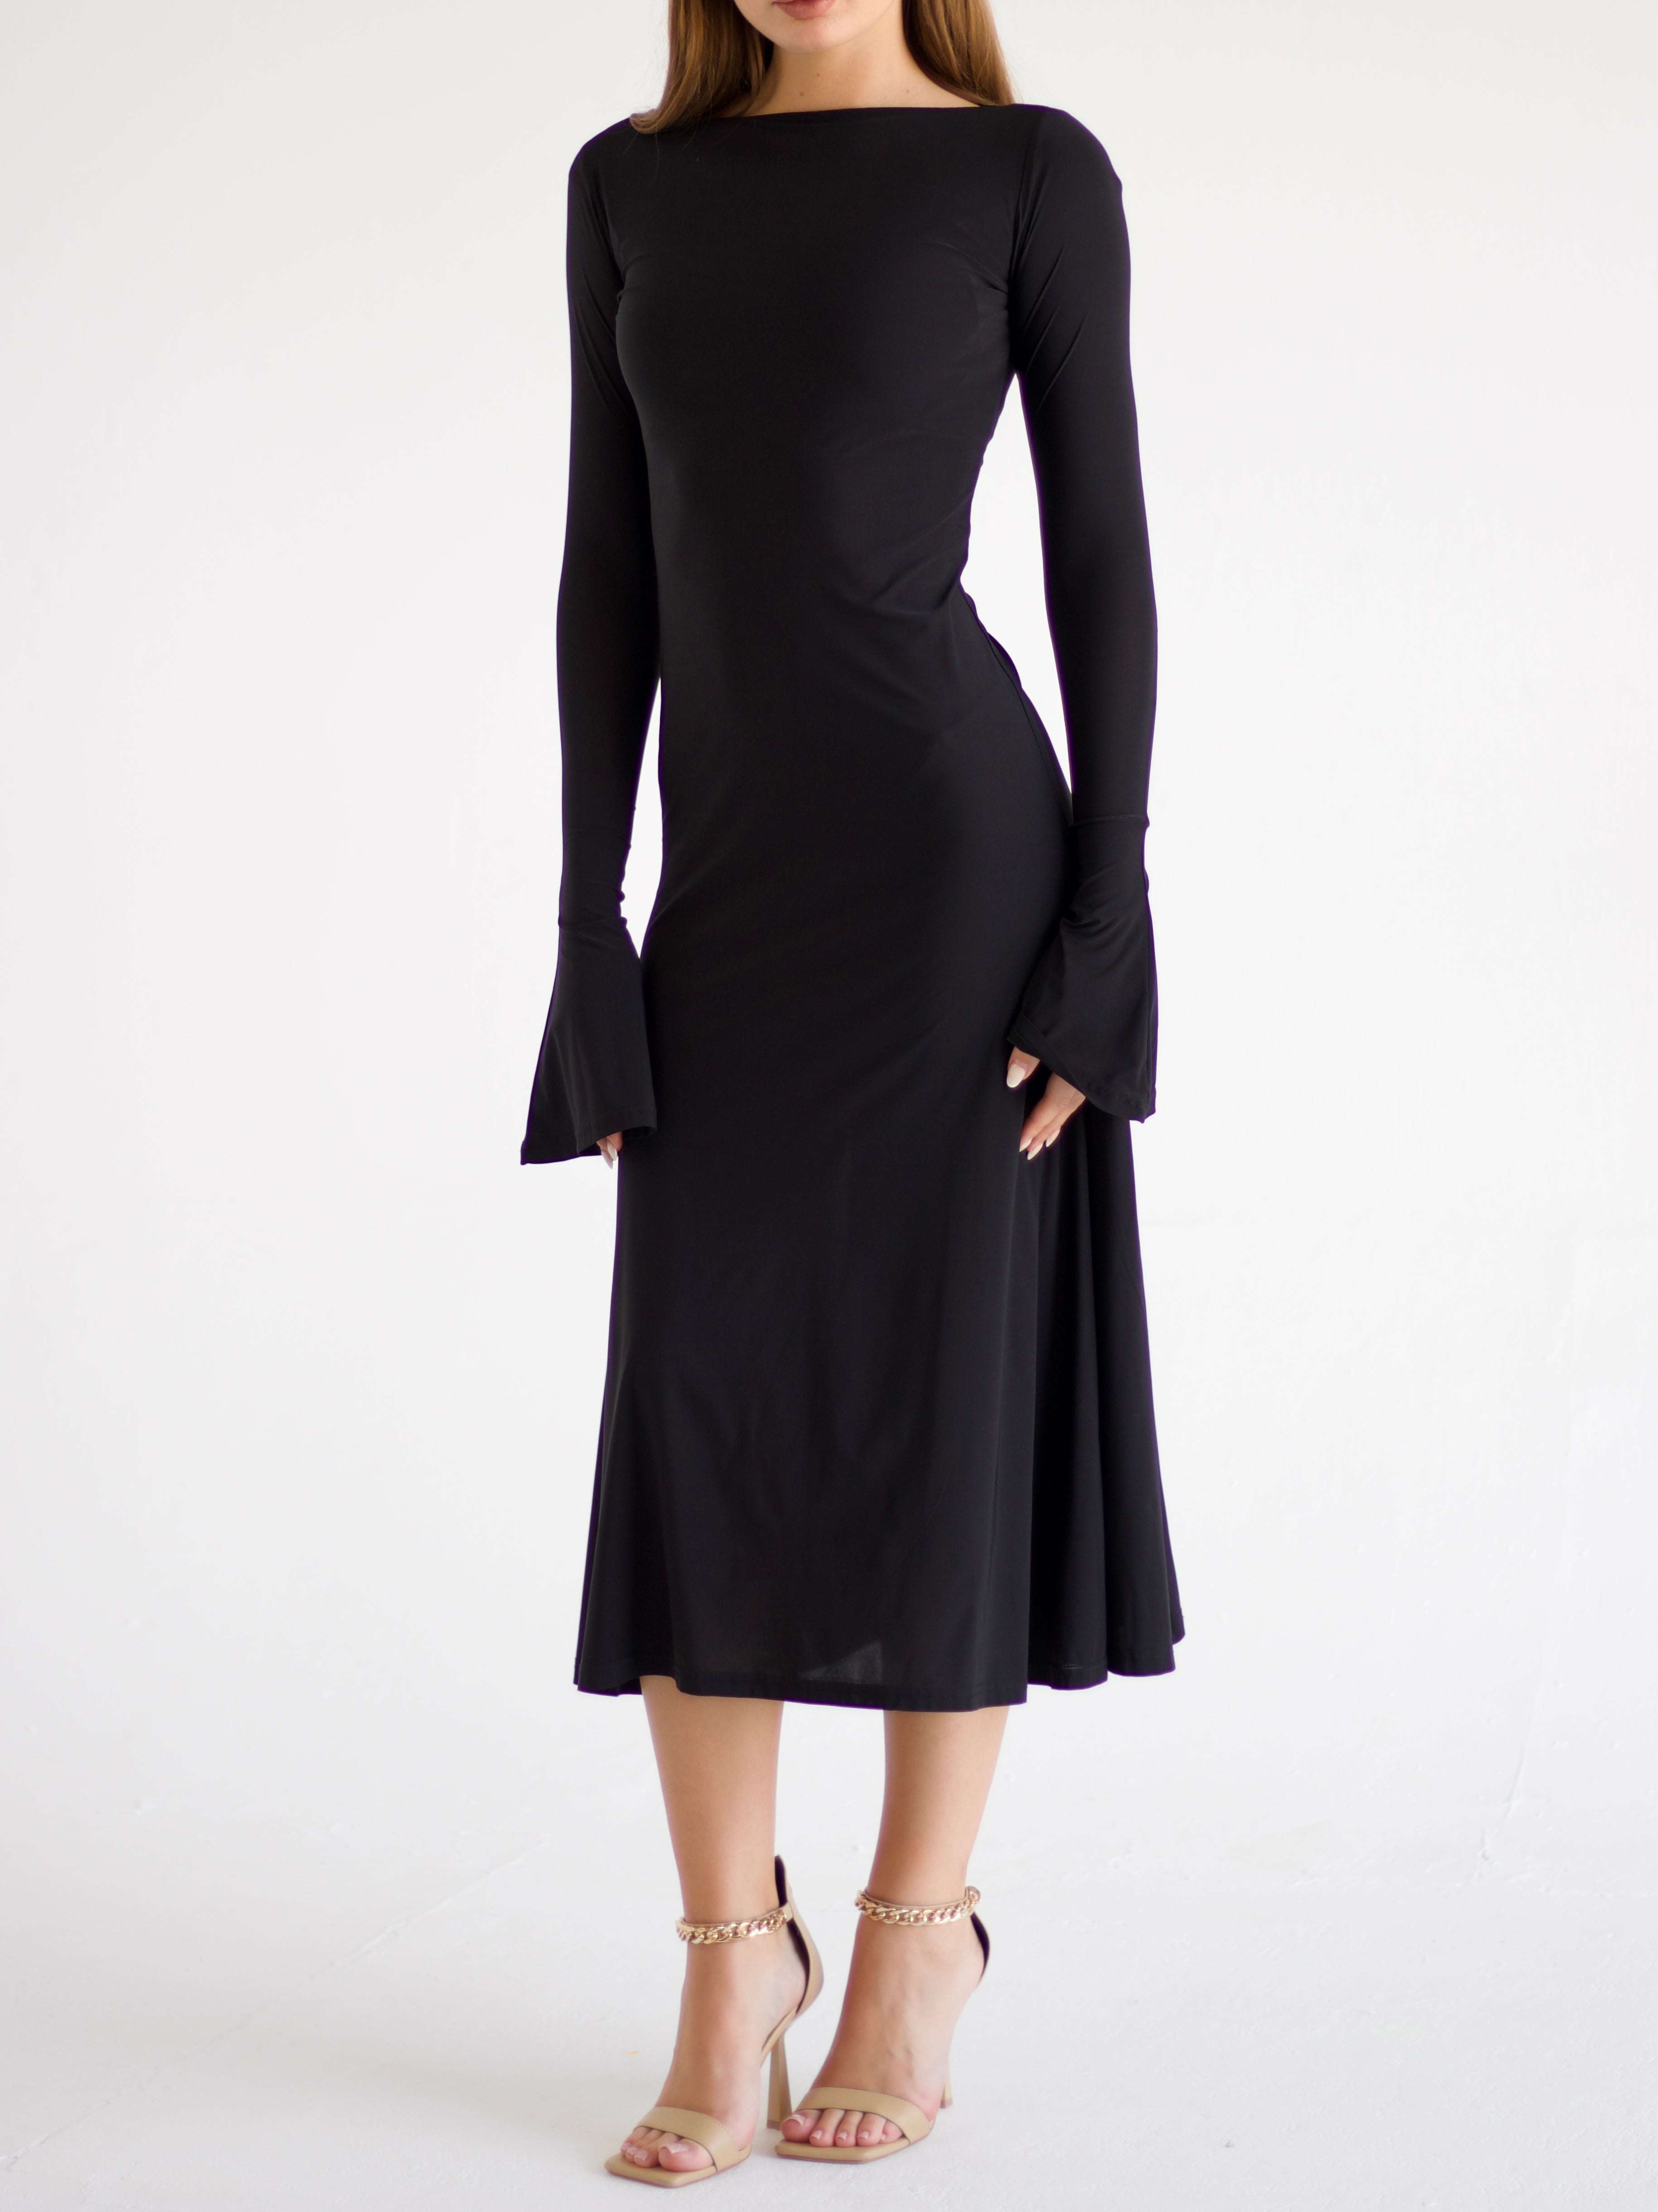 Black kate dress – sand